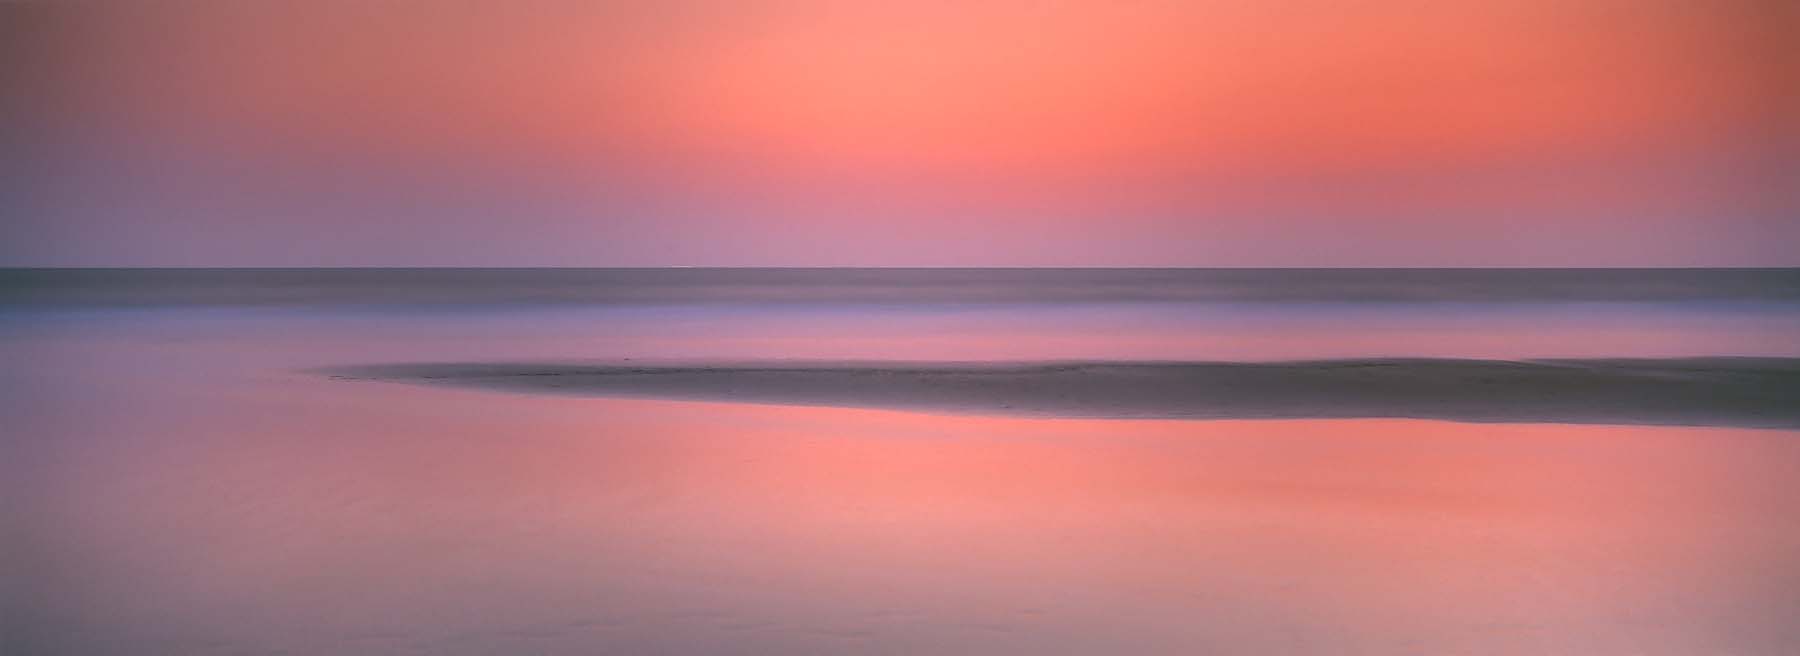 Arambol-Goa-India-Panoramic-Twilight-Landscape